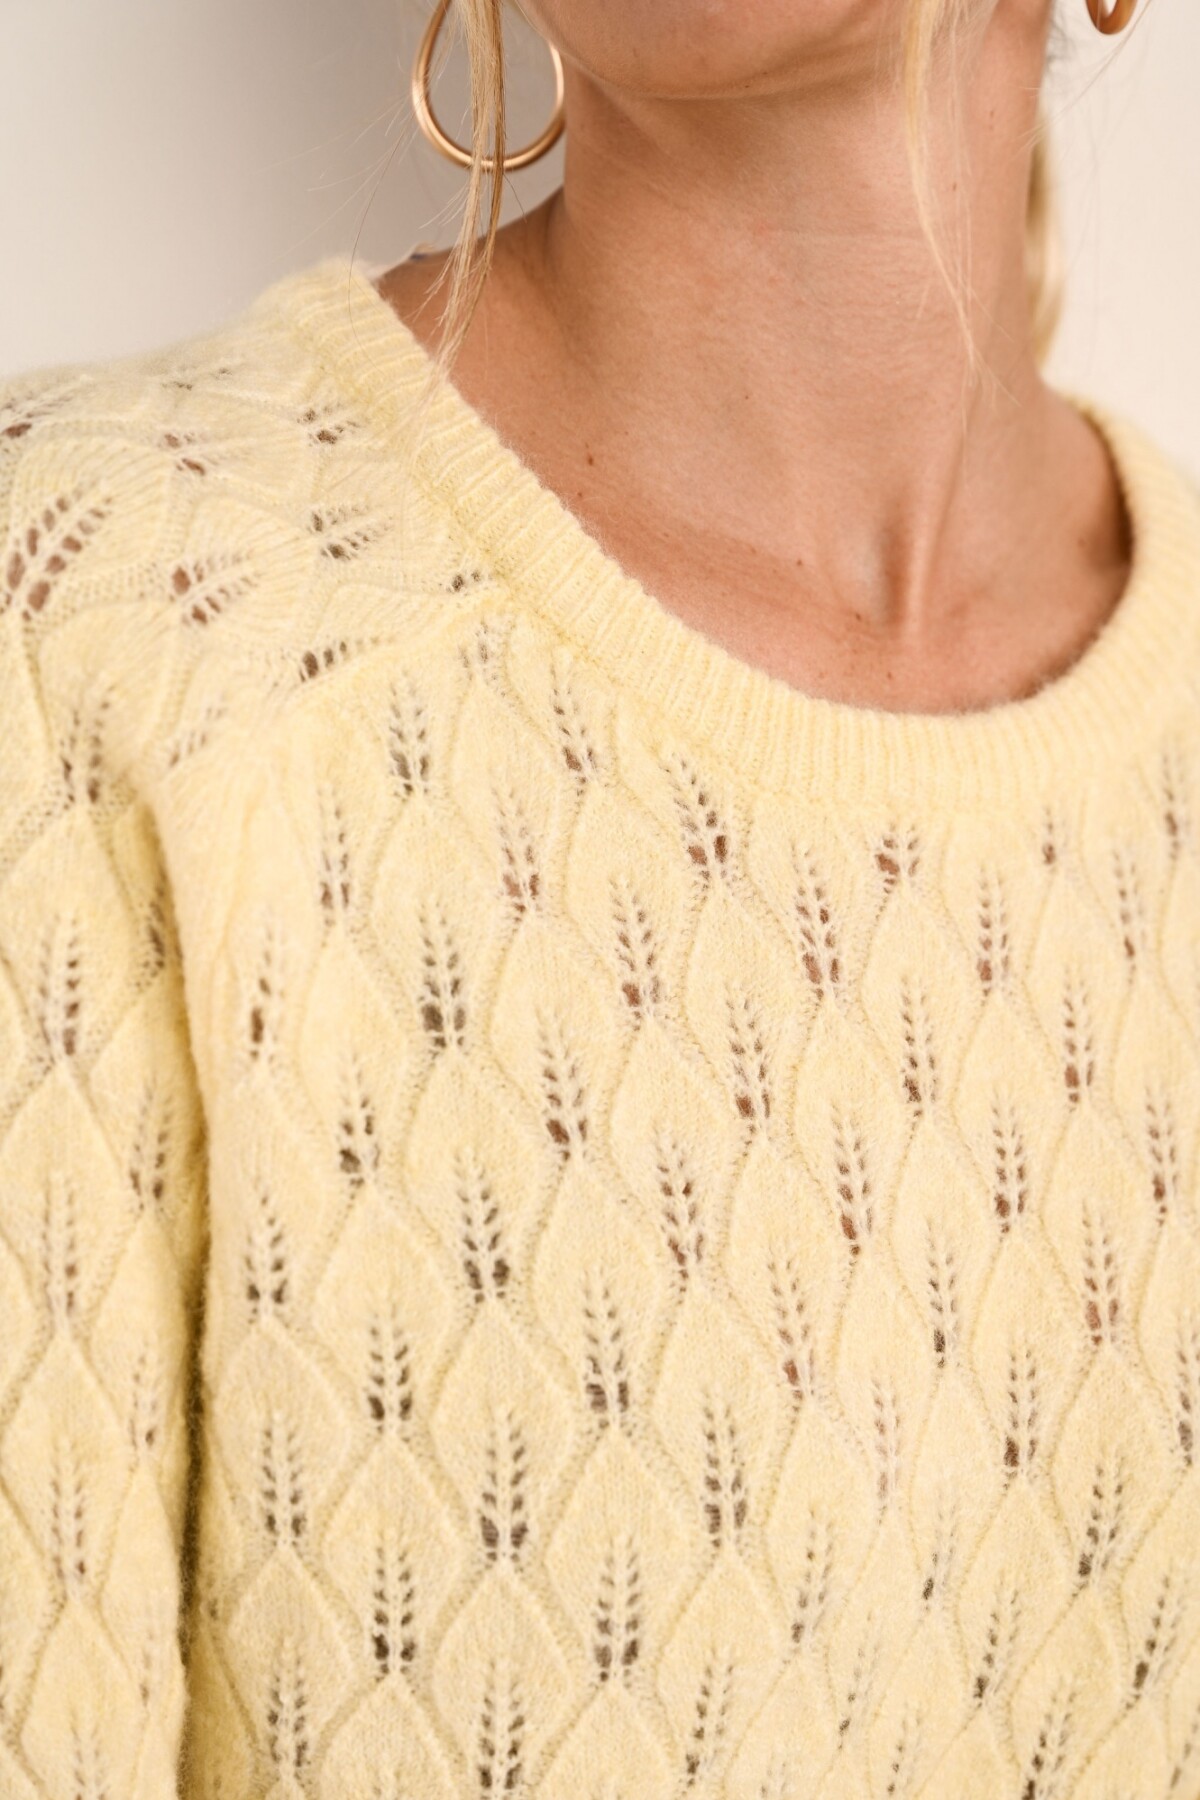 Sweater Textura Amarillo Suave